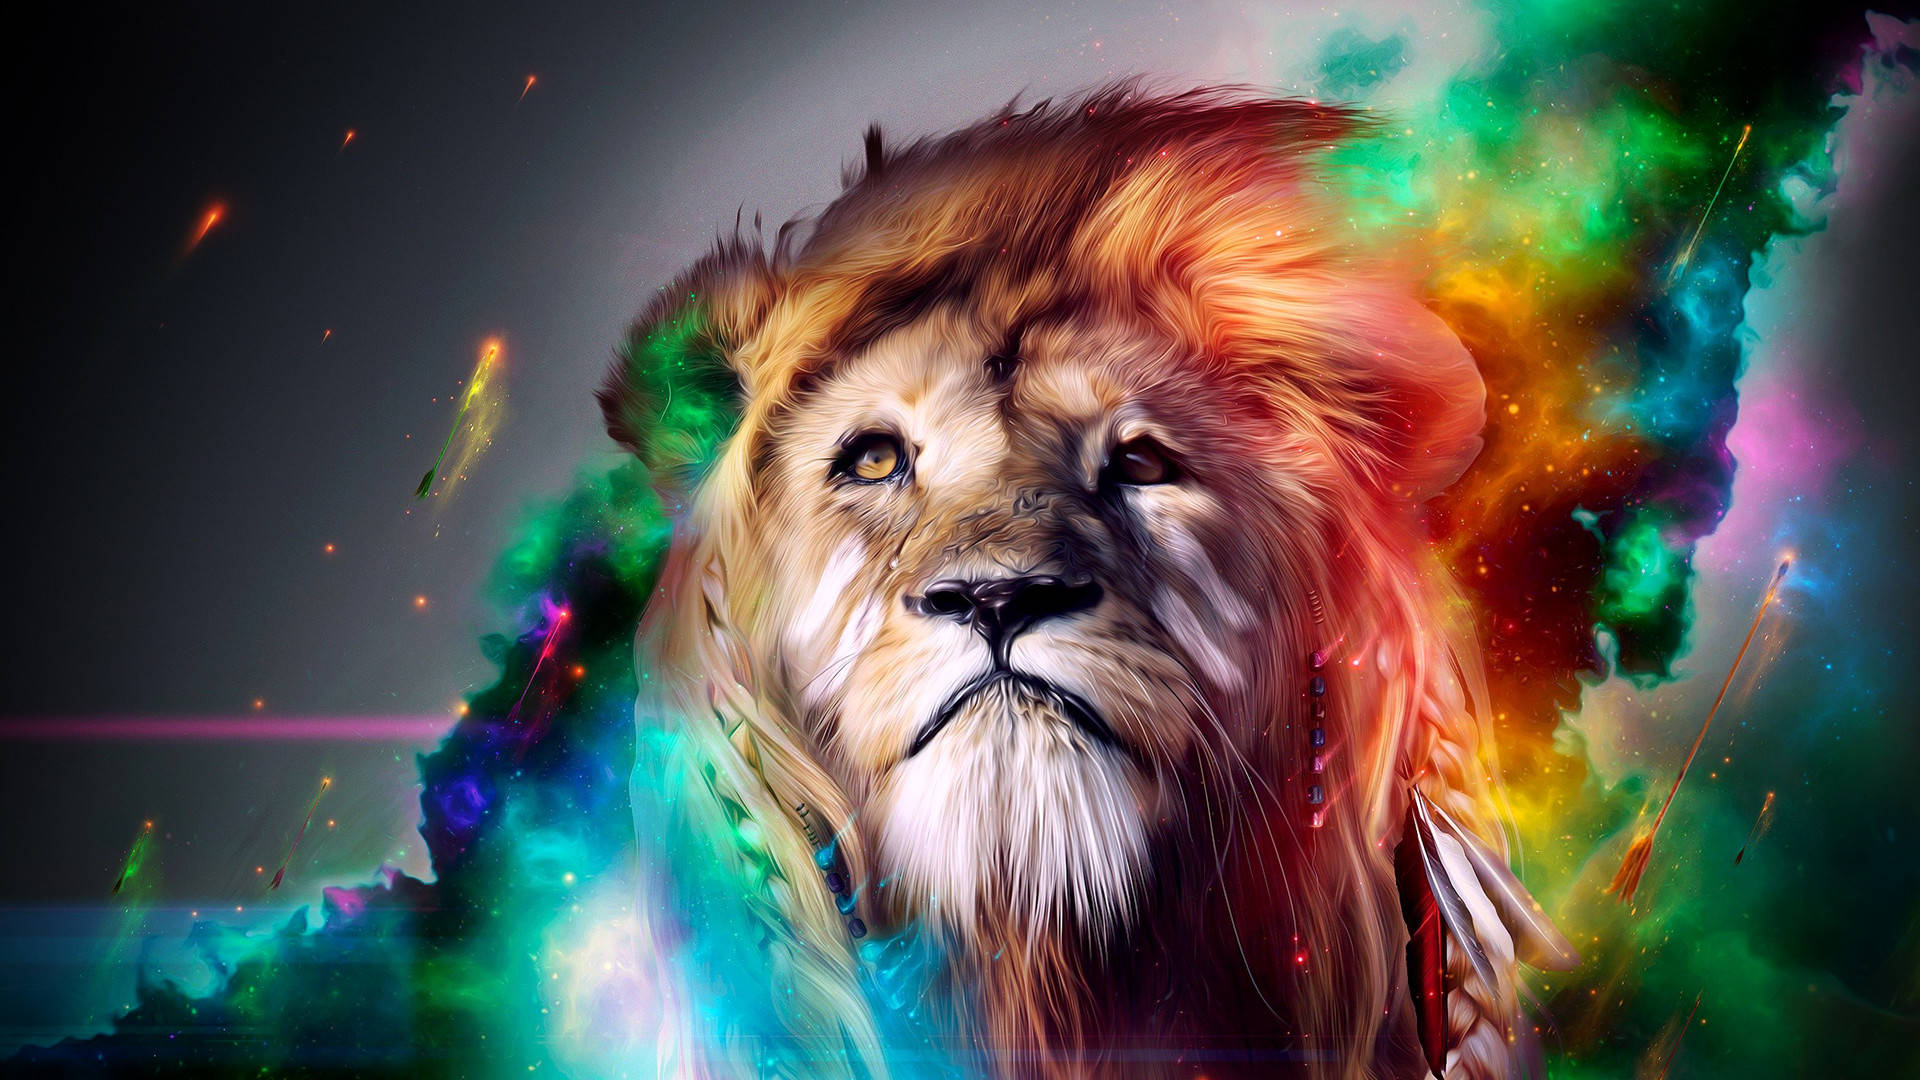 Cool Lion Art 1080p Hd Desktop Background